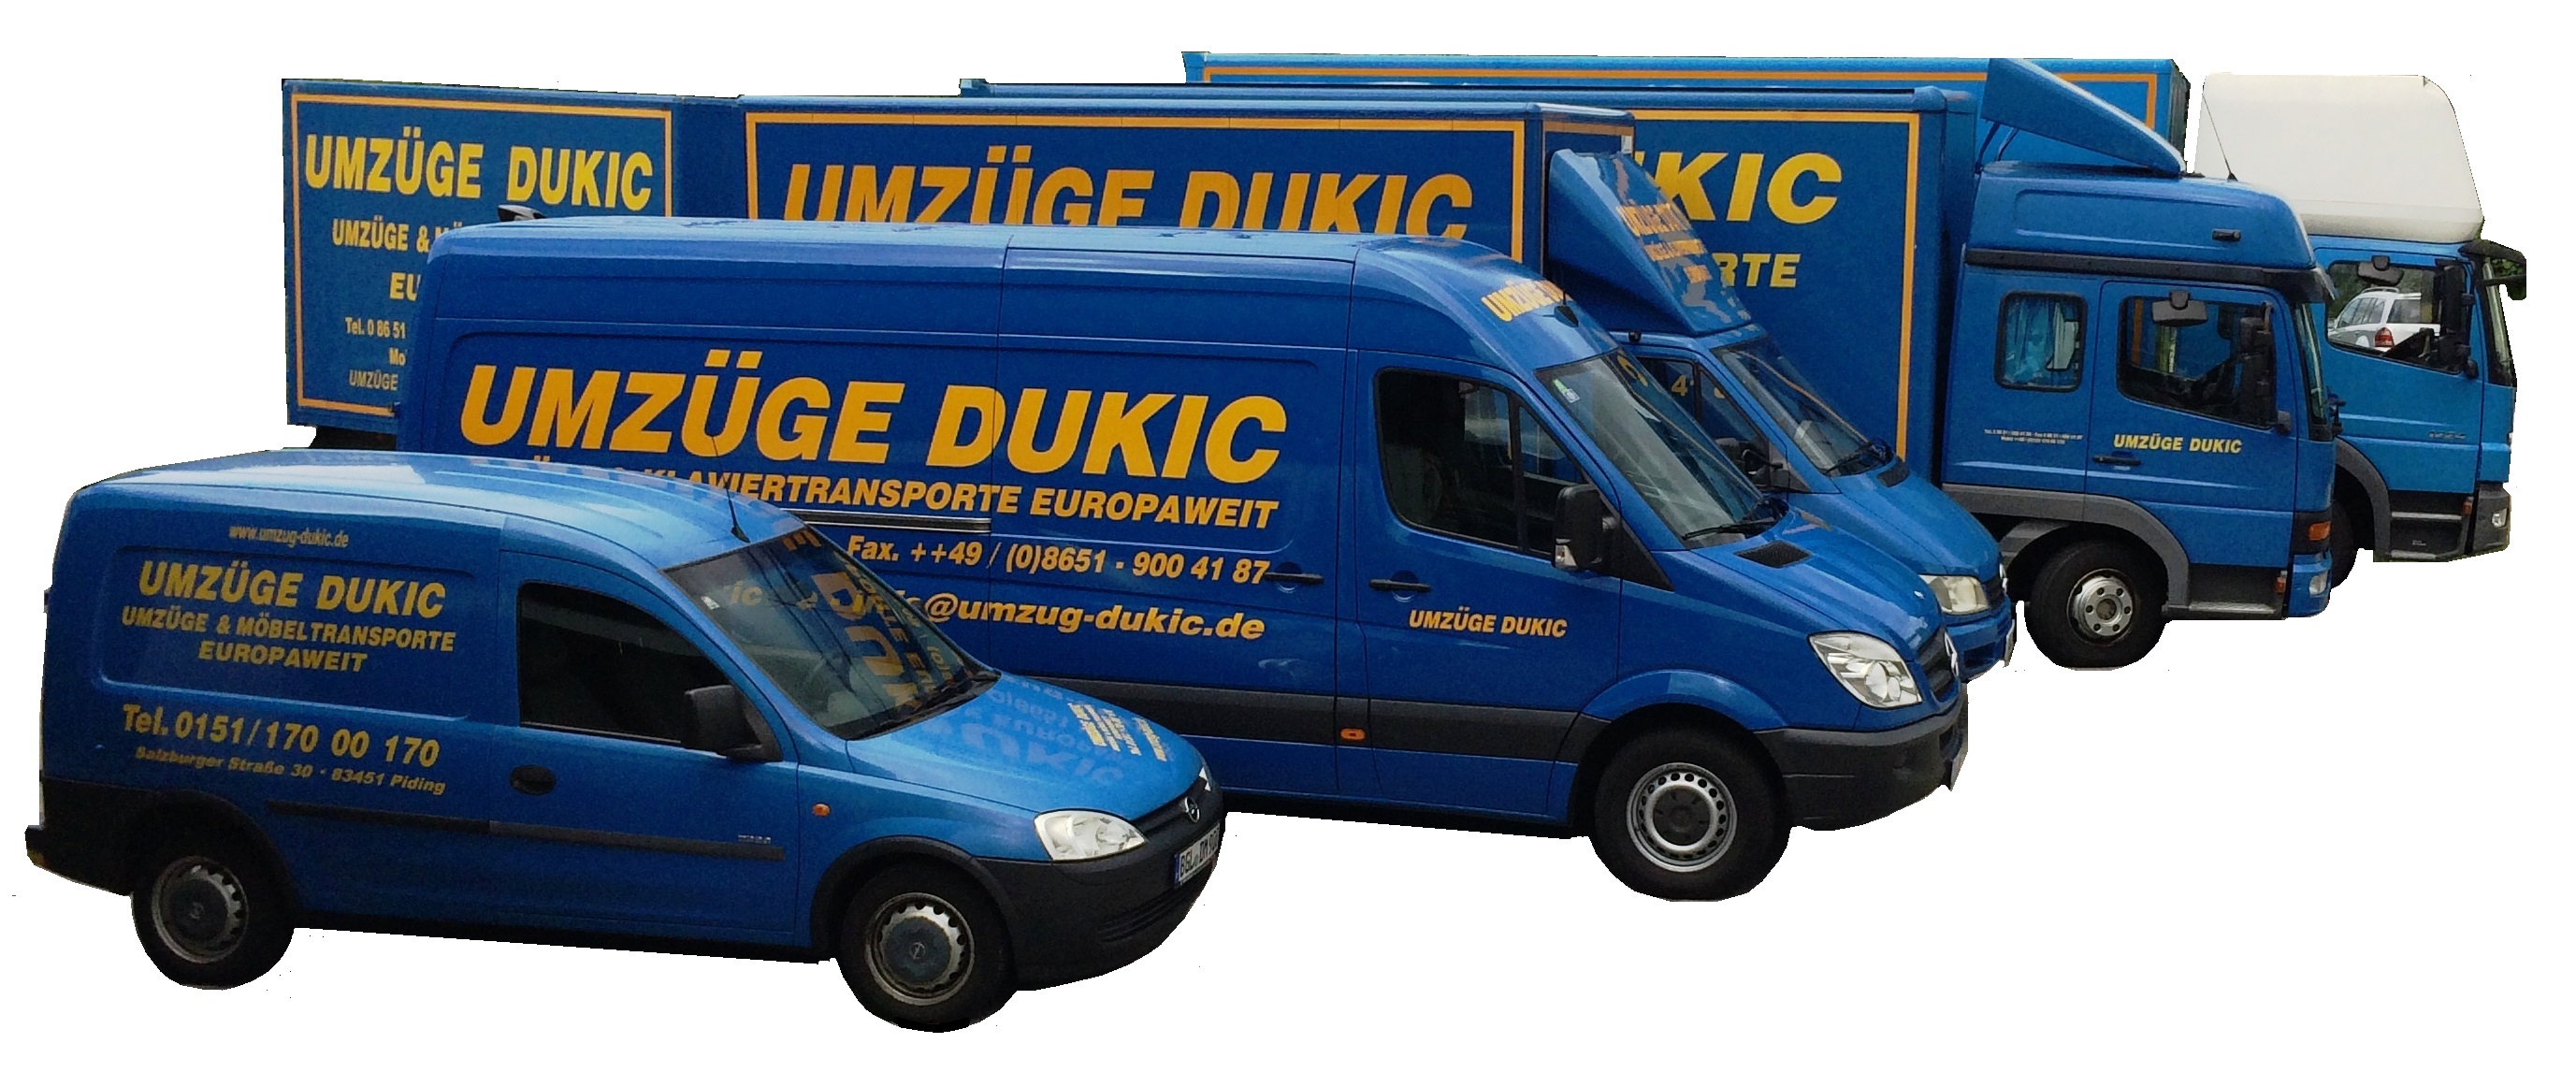 UMZÜGE DUKIC
Umzüge &amp; Klaviertransporte Europaweit
Tel. 08651 / 900 41 88 , Fax.08651 / 900 41 87
www.umzug-dukic.de , info@umzug-dukic.de